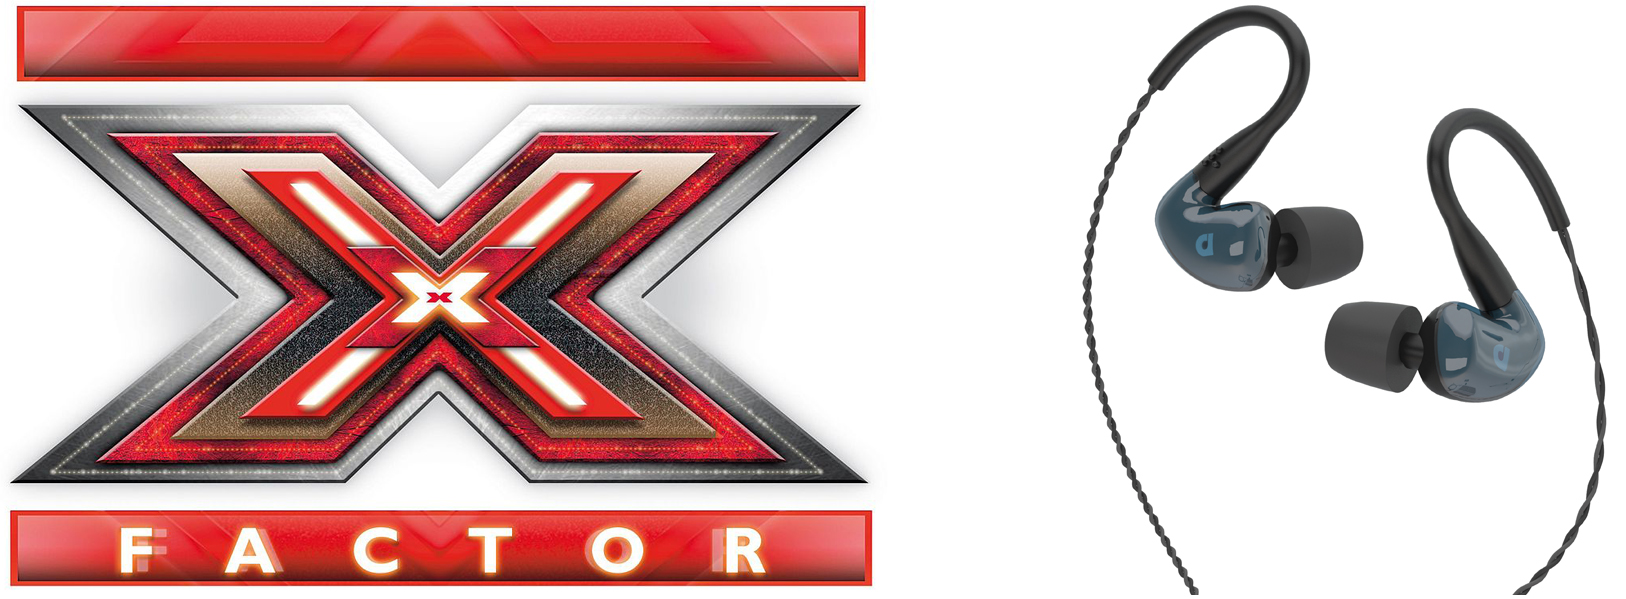 X-Factor Press Release Header